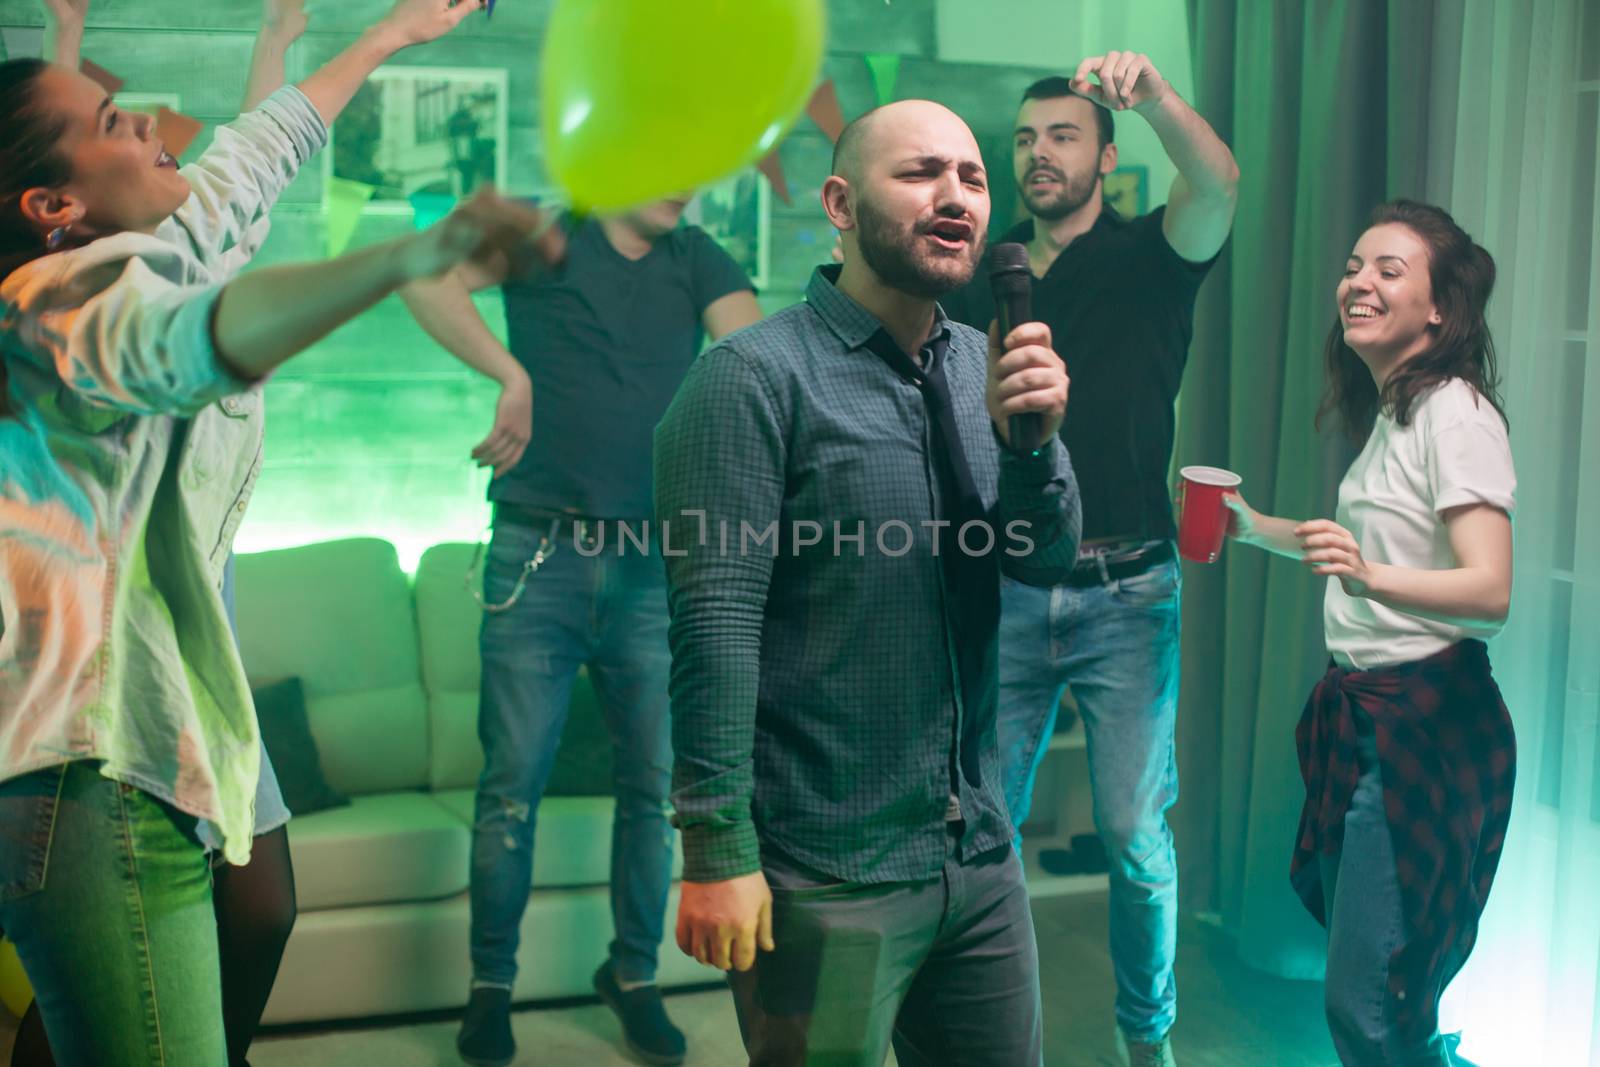 Cheerful bald man doing karaoke by DCStudio